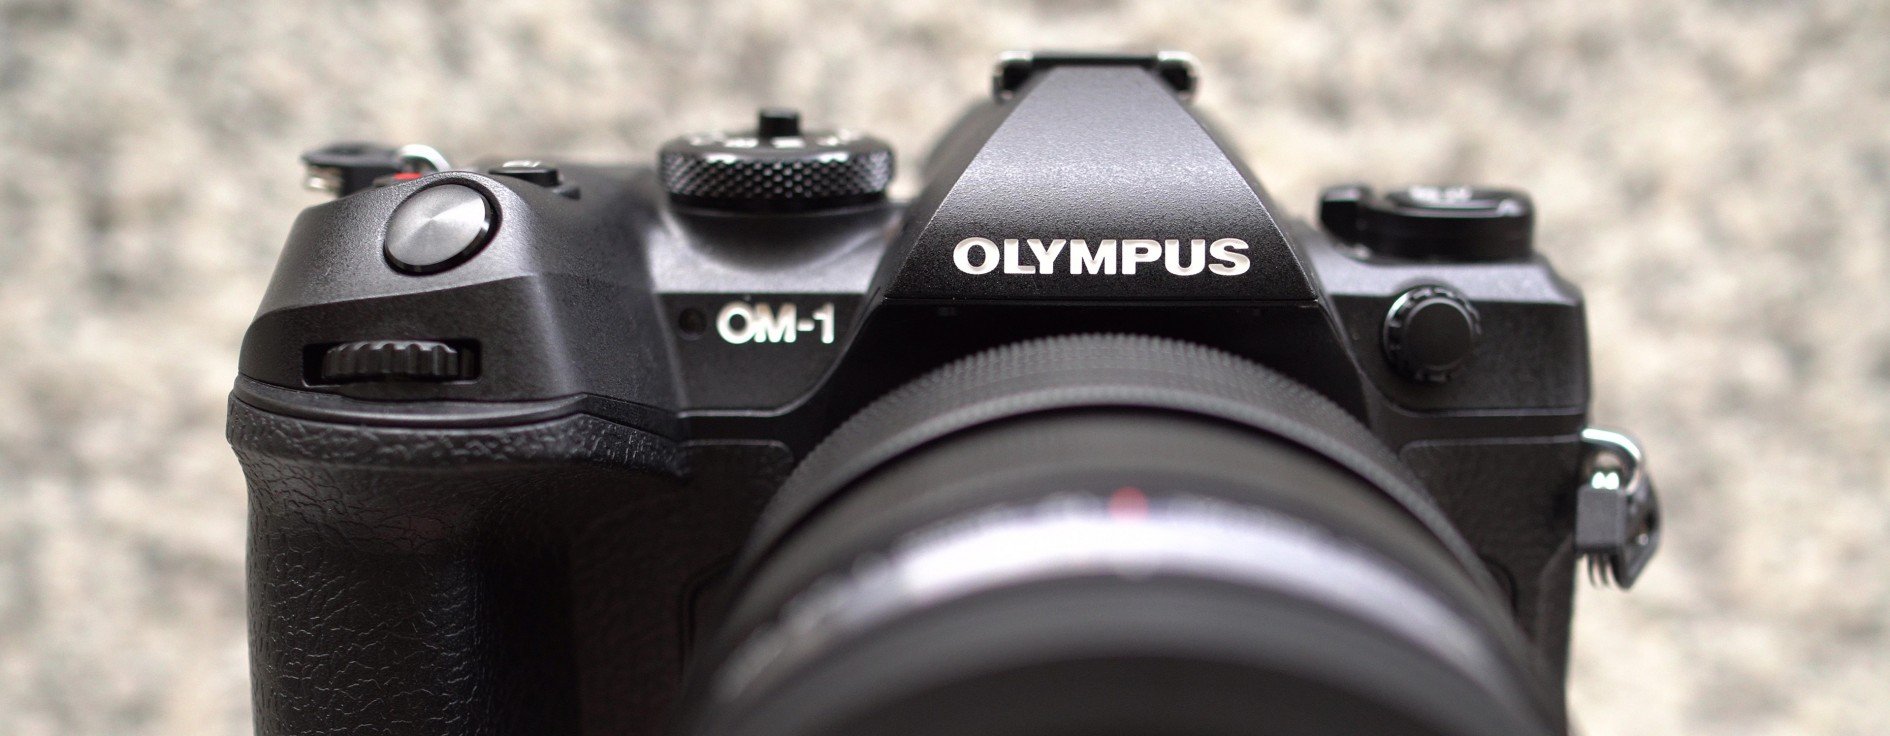 olympus-om-1-header-1-945x368@2x.jpg